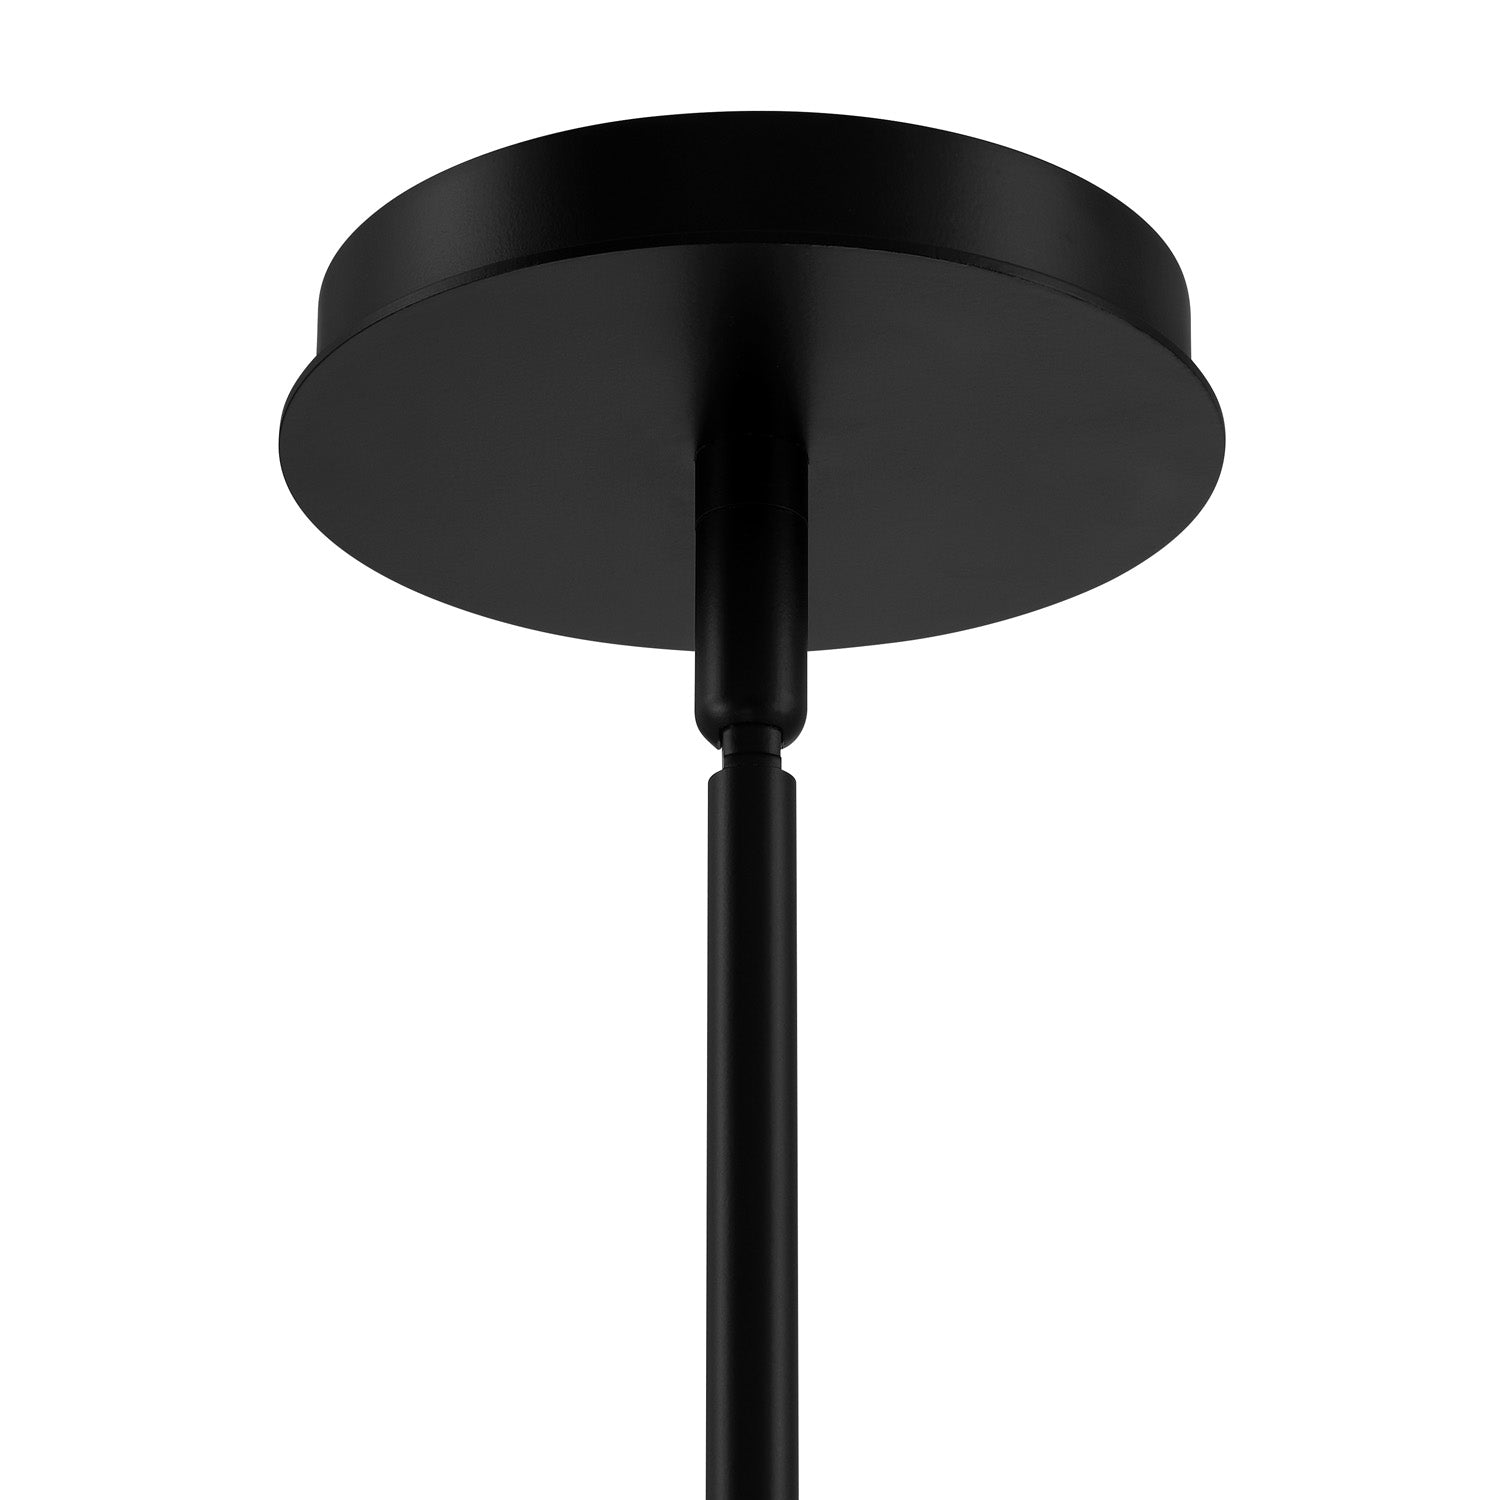 Levi 4-Globe LED Chandelier, Matte Black